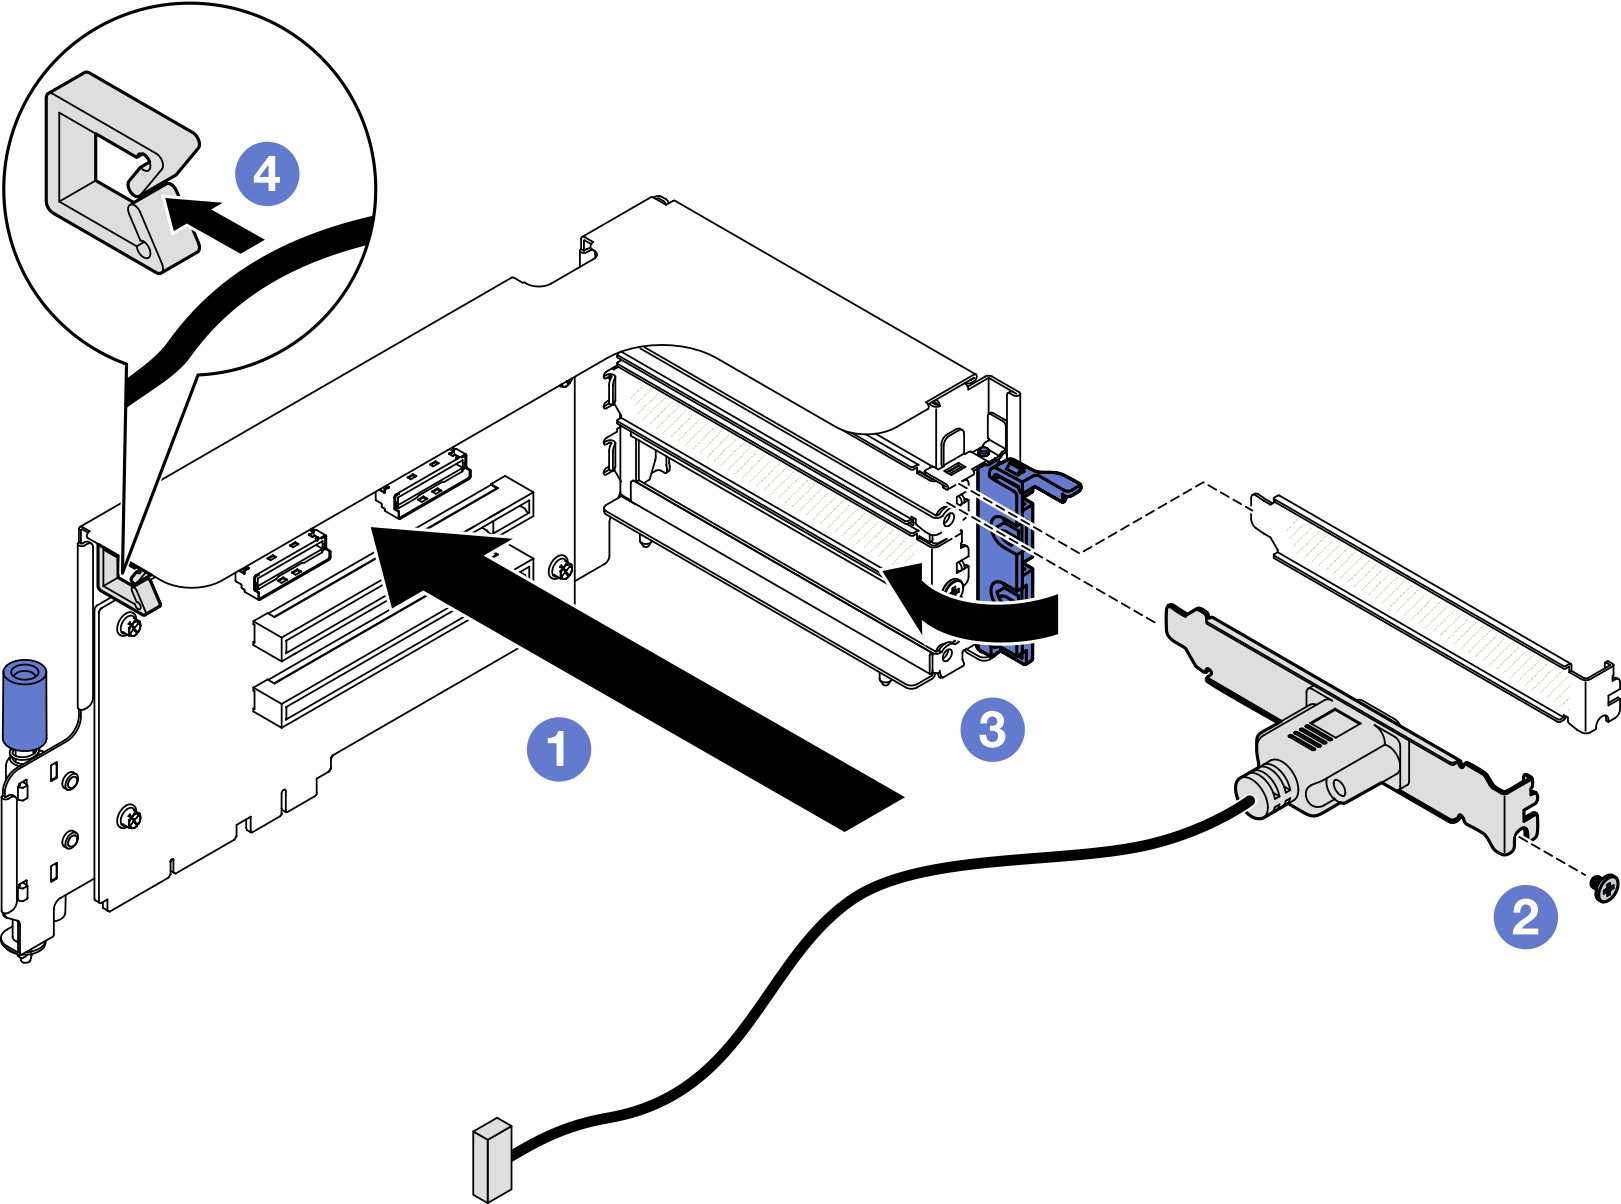 Serial port module installation